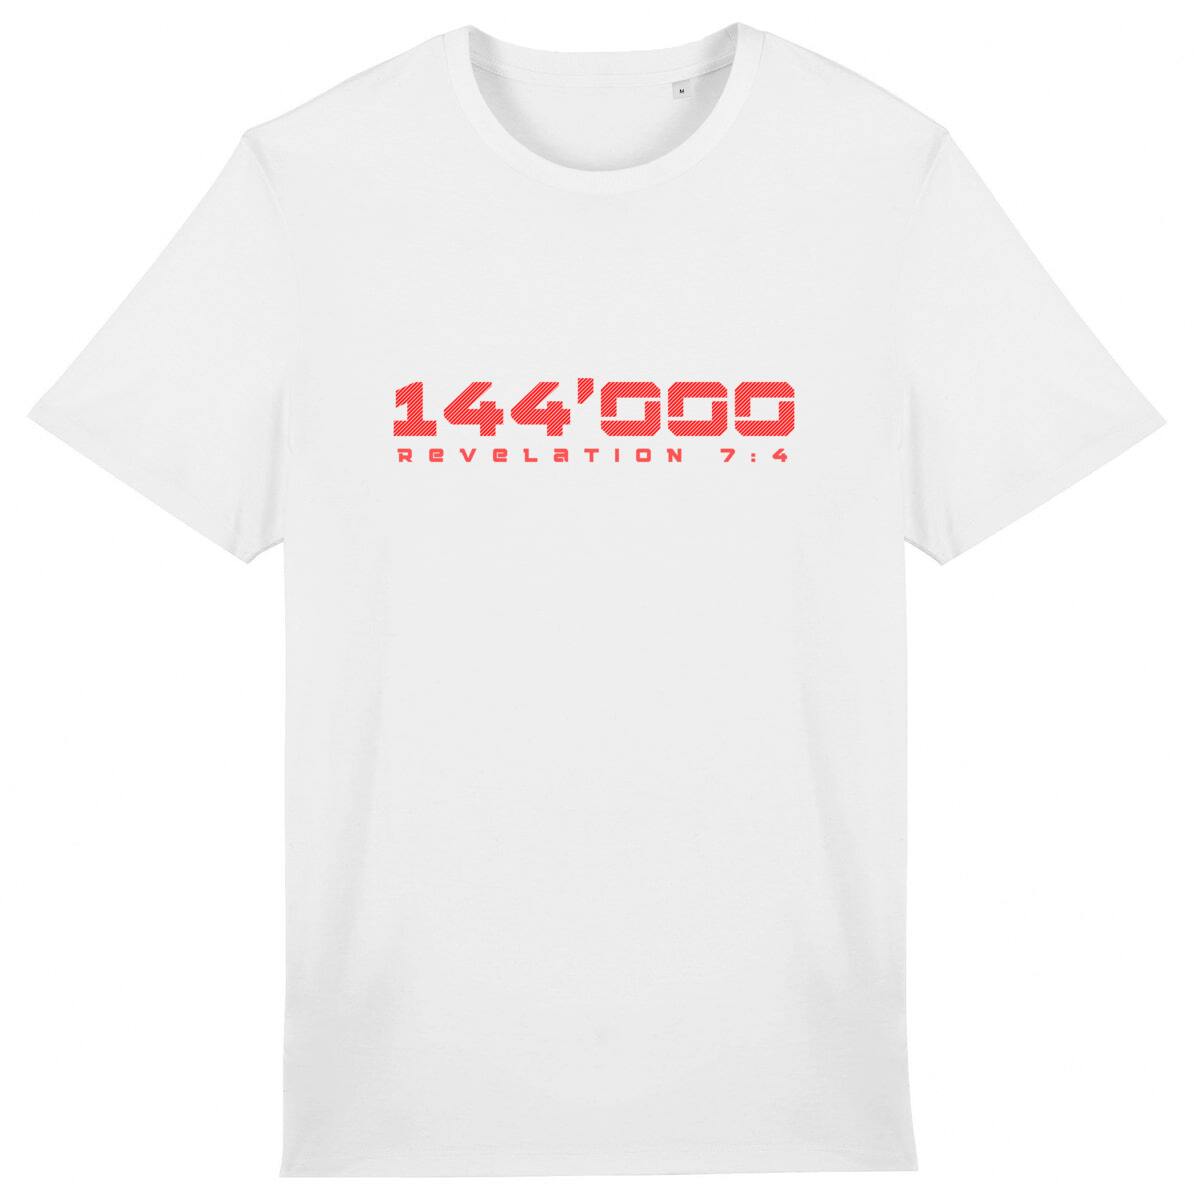 144000 Premium T-Shirt